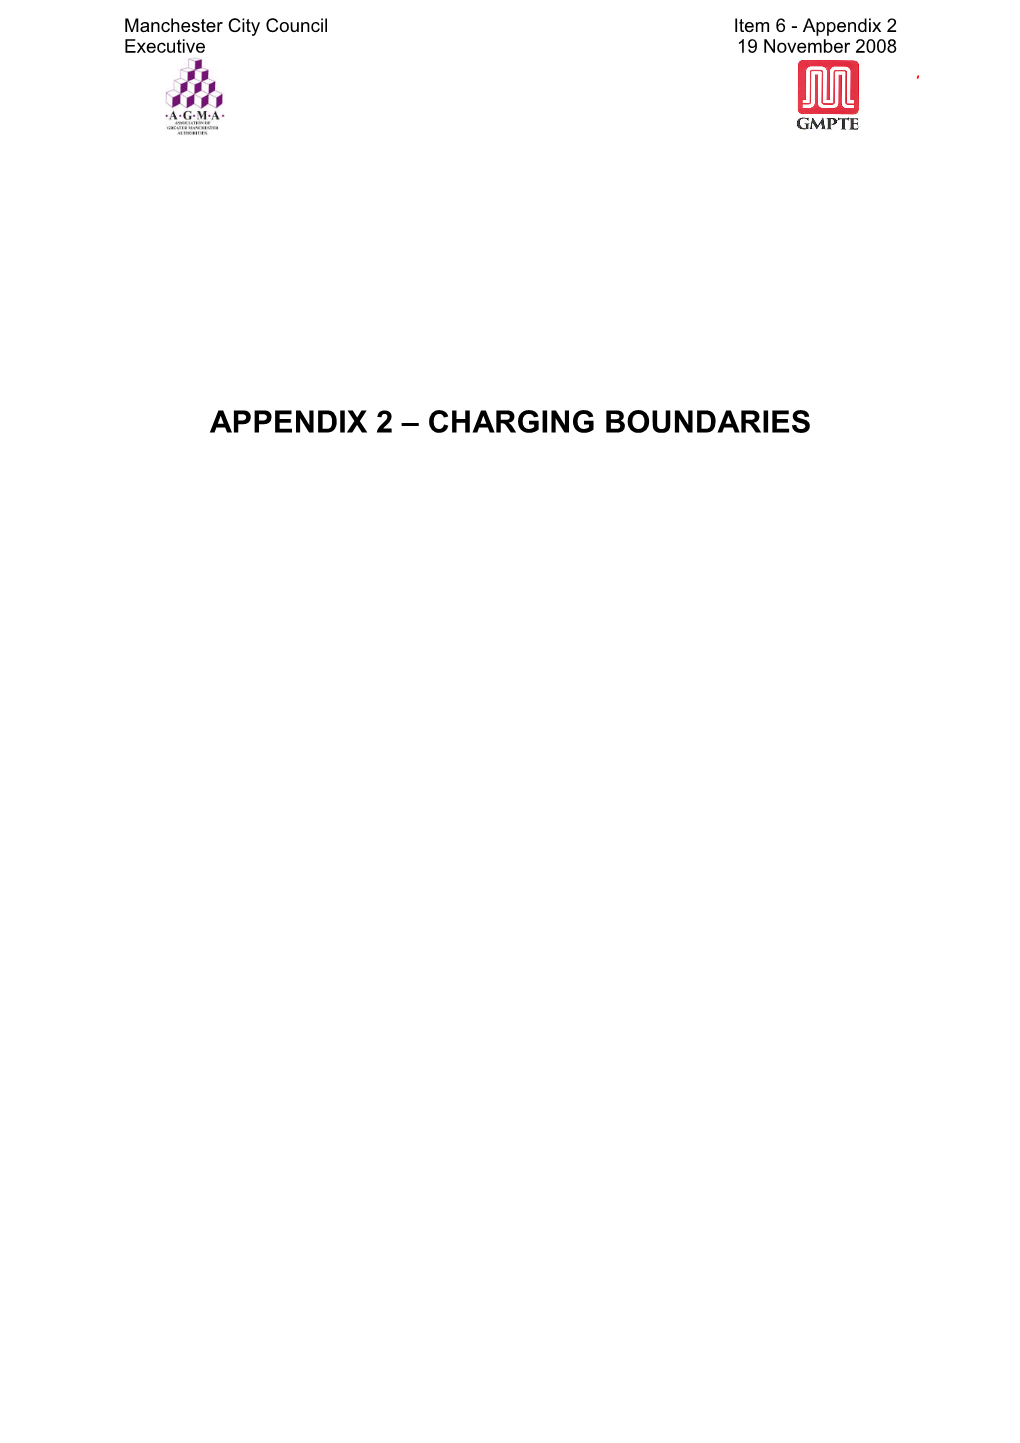 CHARGING BOUNDARIES Manchester City Council Item 6 - Appendix 2 Executive 19 November 2008